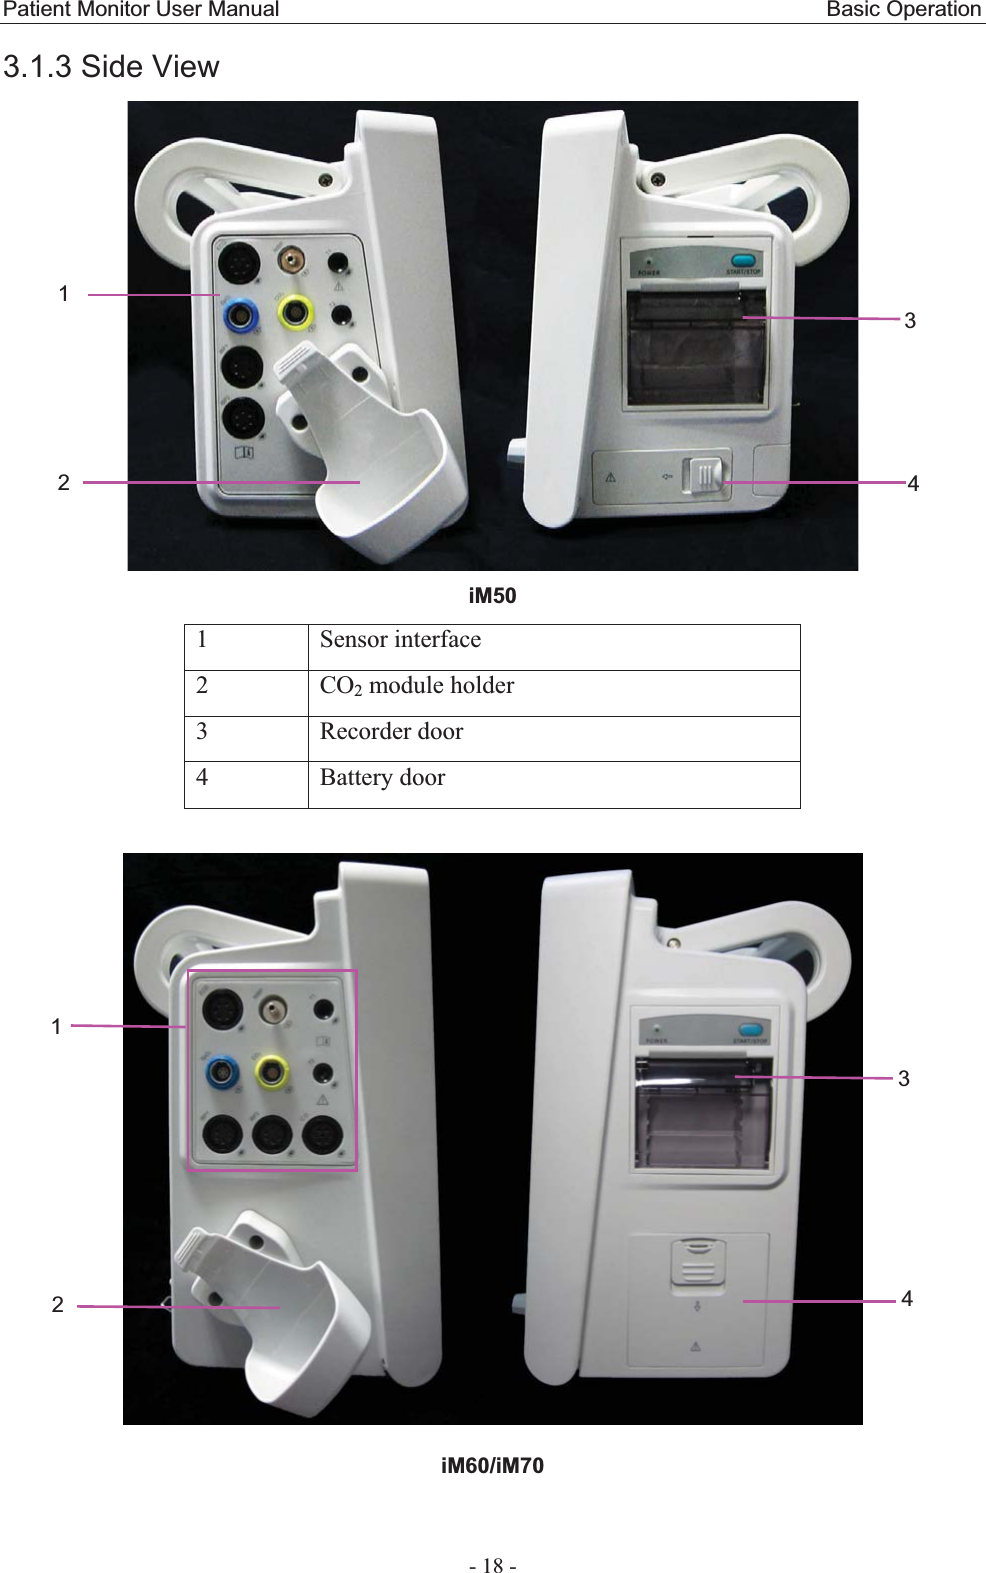 Patient Monitor User Manual                                                  Basic Operation  - 18 - 3.1.3 Side View  iM501 Sensor interface 2 CO2 module holder 3 Recorder door 4 Battery door   iM60/iM7012341234